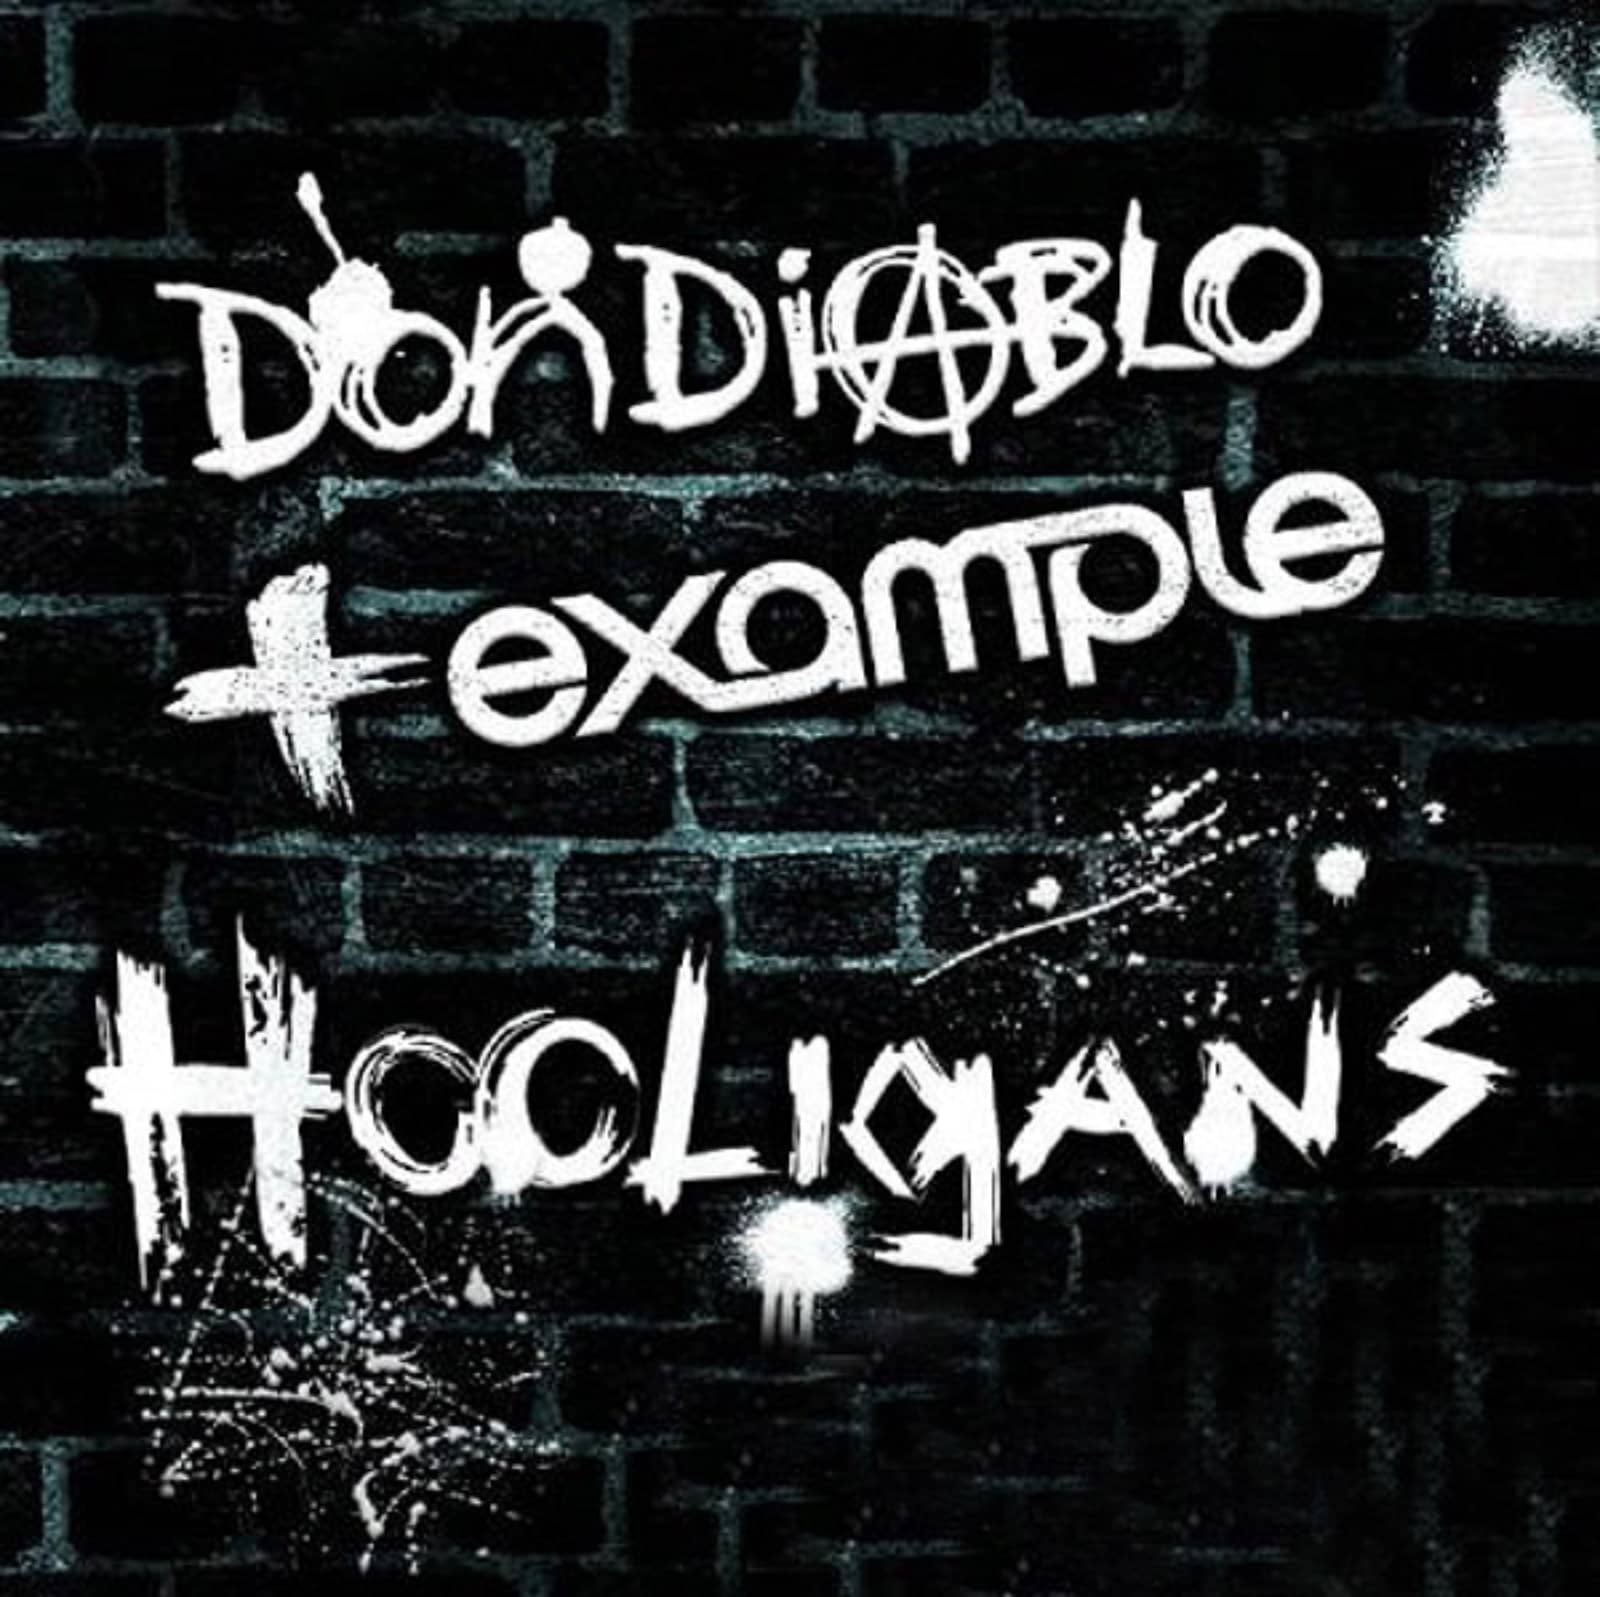 Don tunes. Don Diablo, example Hooligans. Don Diablo и example. Дон хулиган арт.